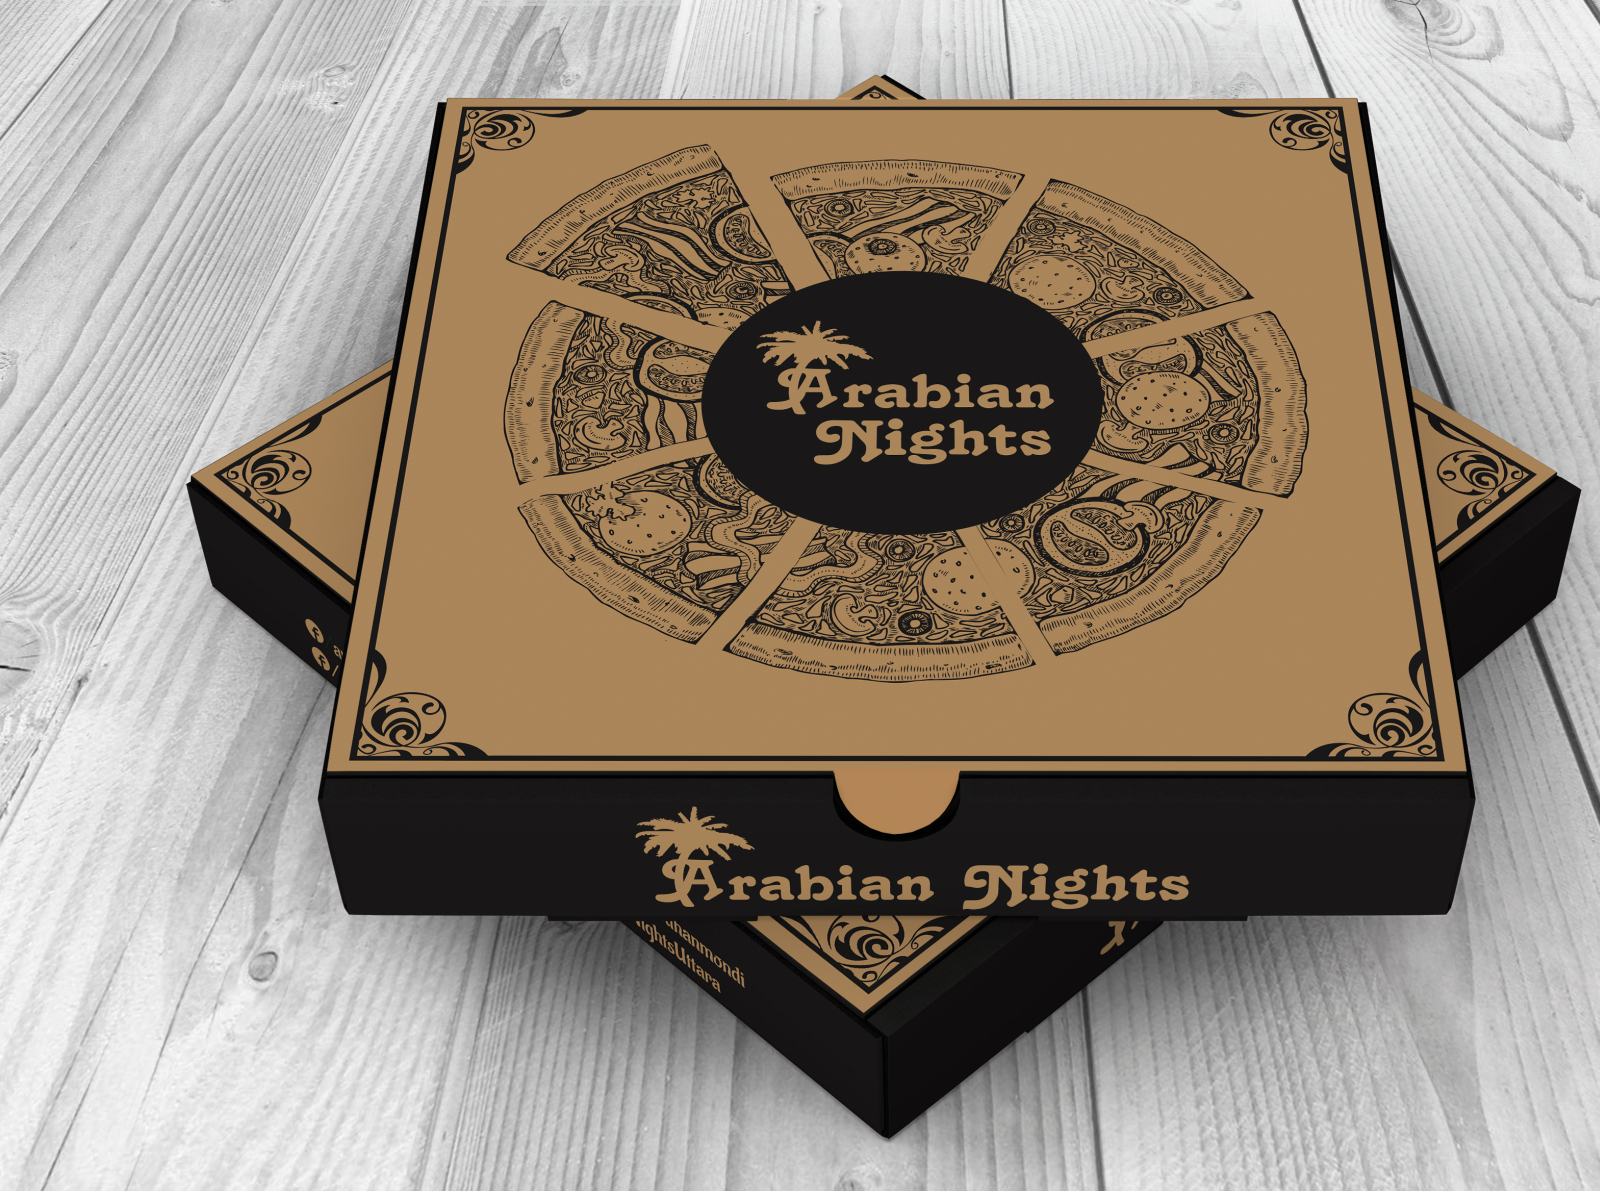 Parlour Pizza box design